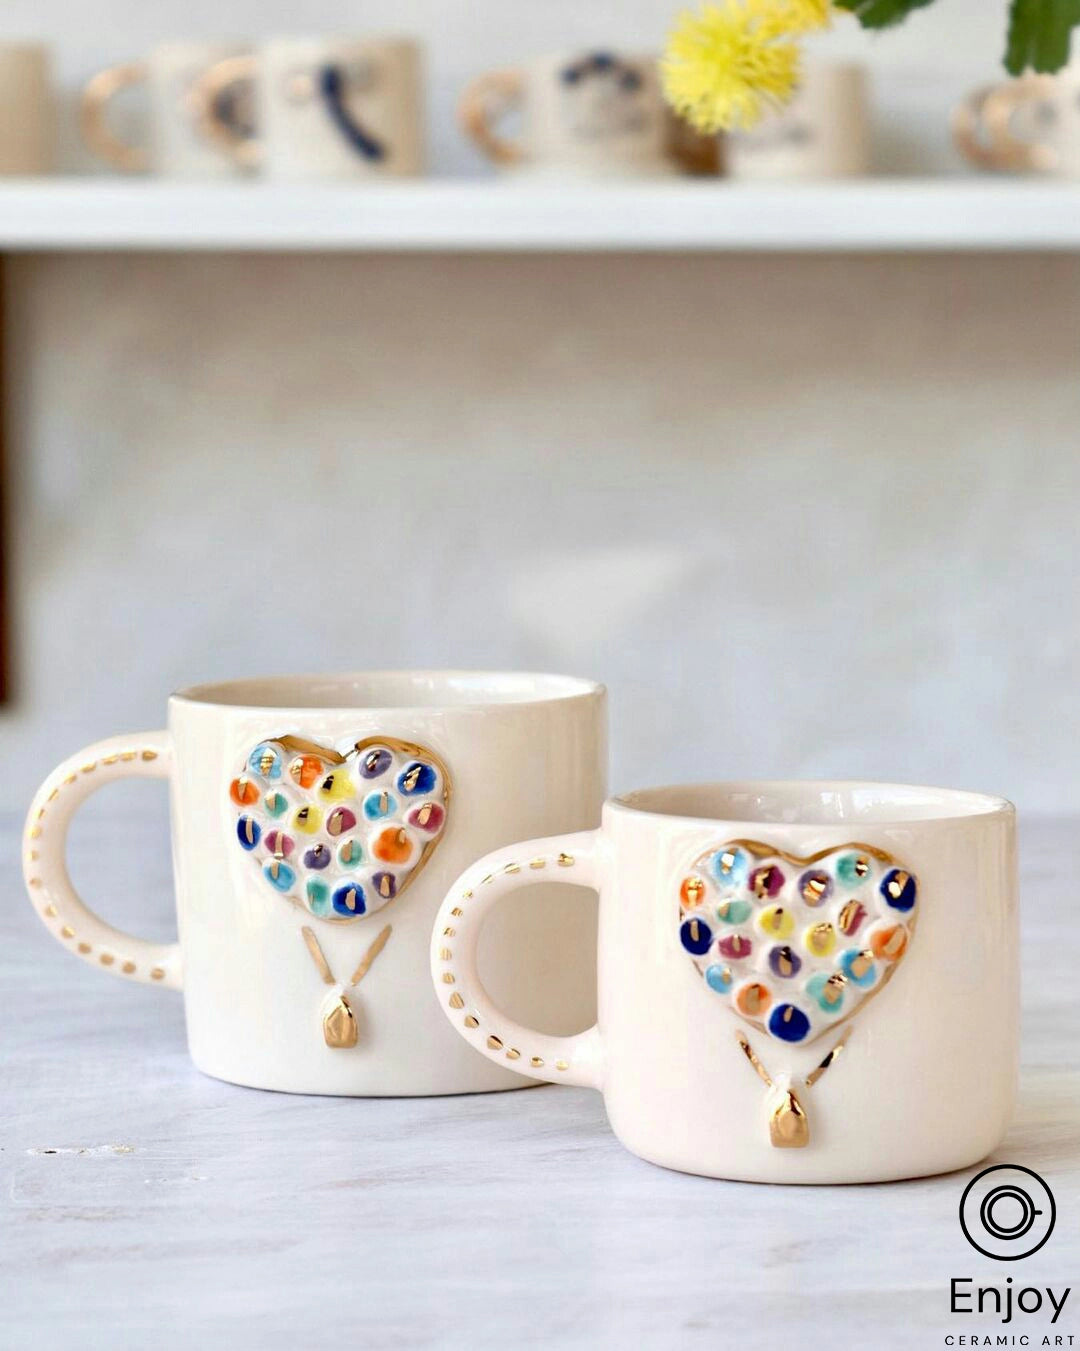 Handmade 'Up' Movie Ceramic Coffee Mug - 10 Oz Disney Pixar Inspired Coffee Cup